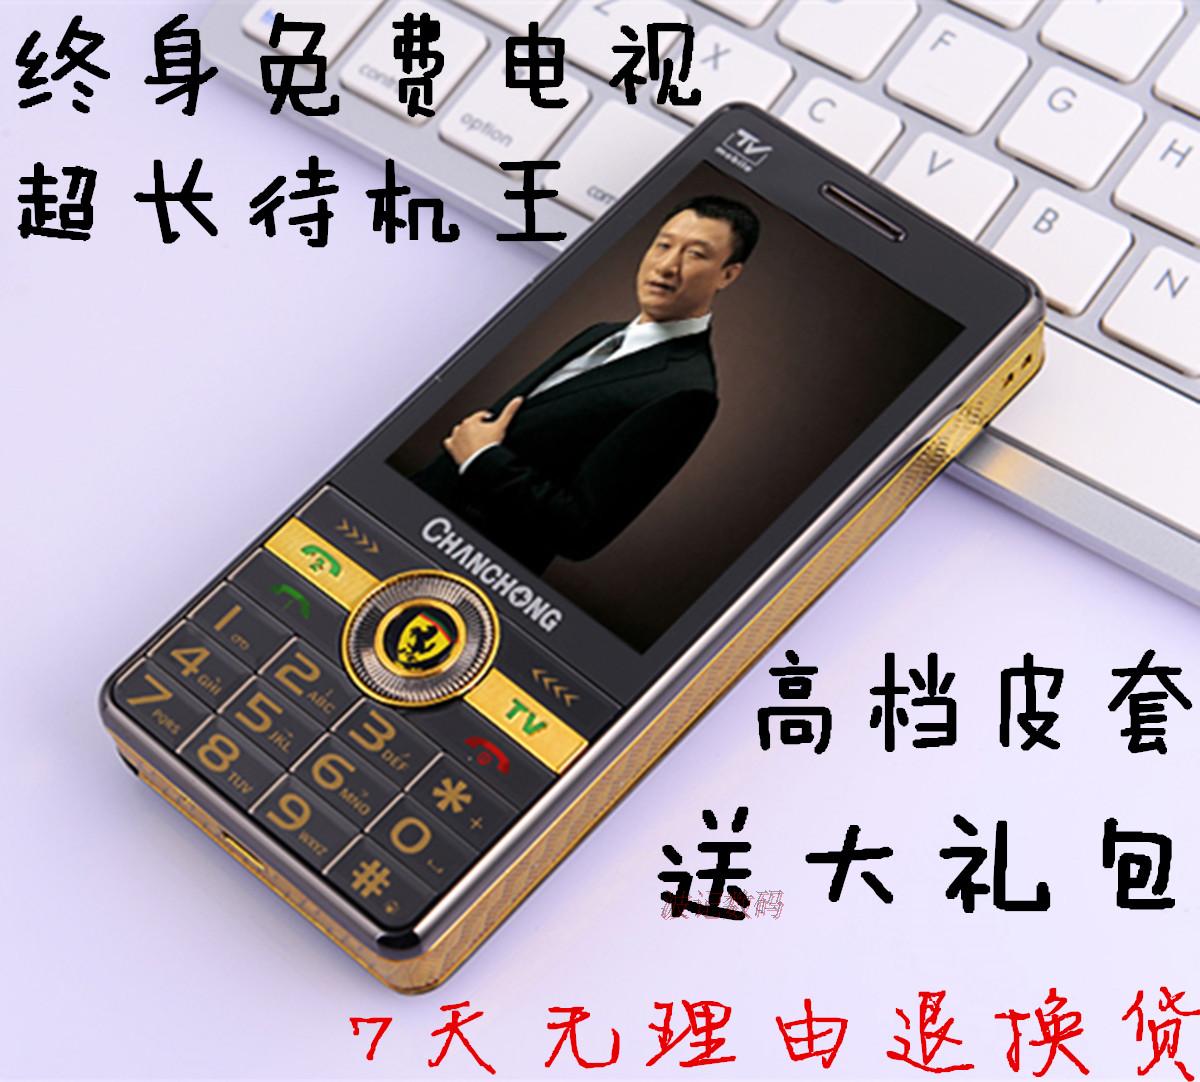 Changhong/长虹 V7安卓2.3.5智能手机3G GPS双卡双待官方 高配版_长虹手机官方旗舰店